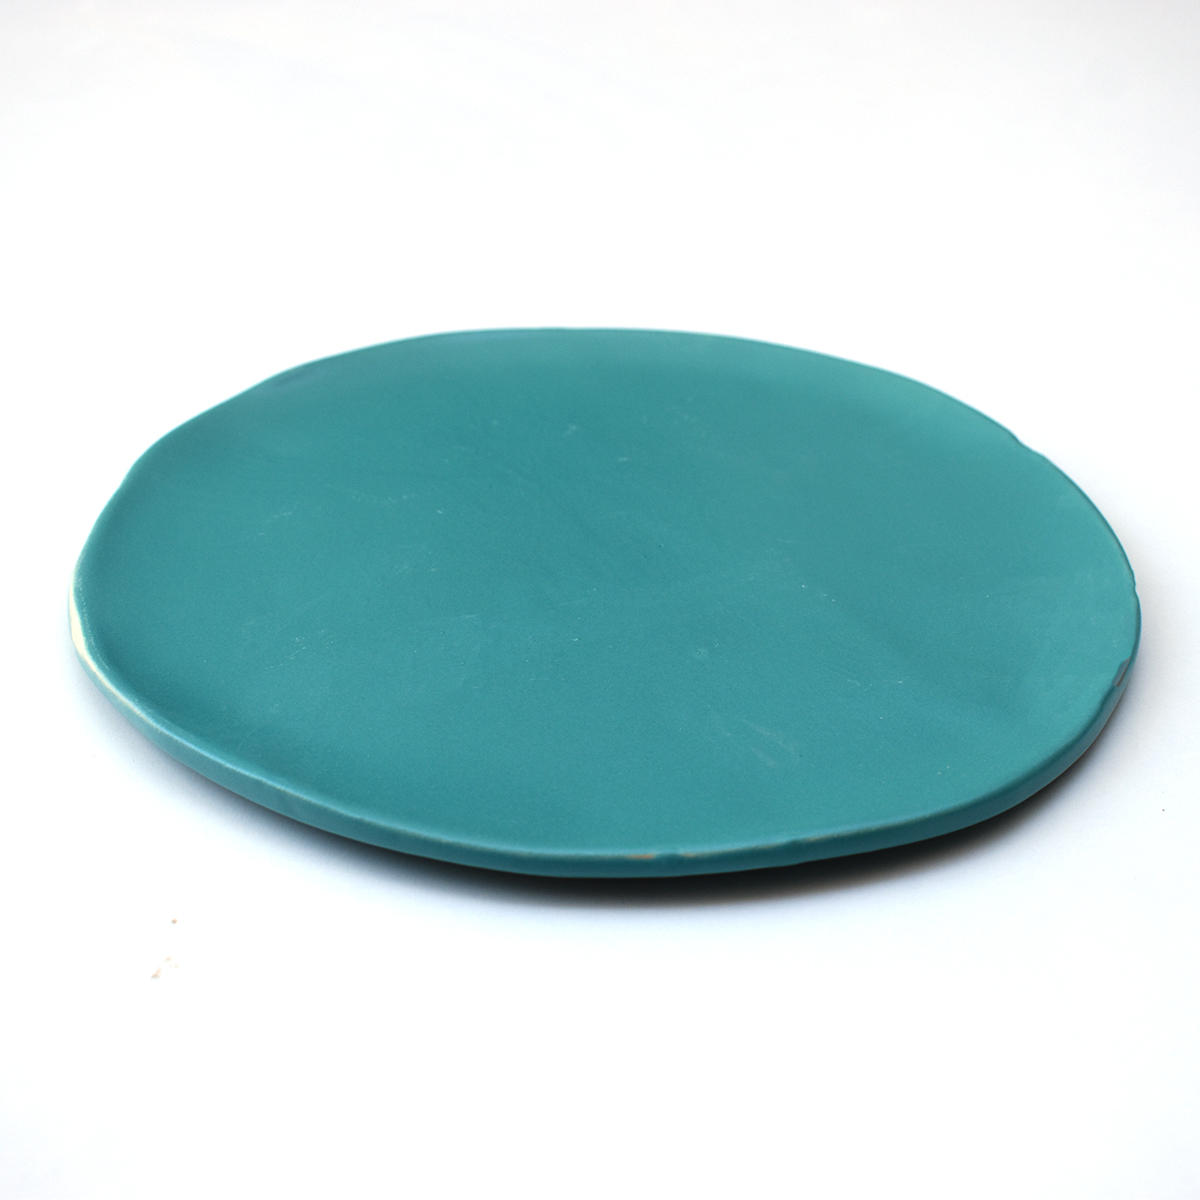 Irregular Turquoise Plate